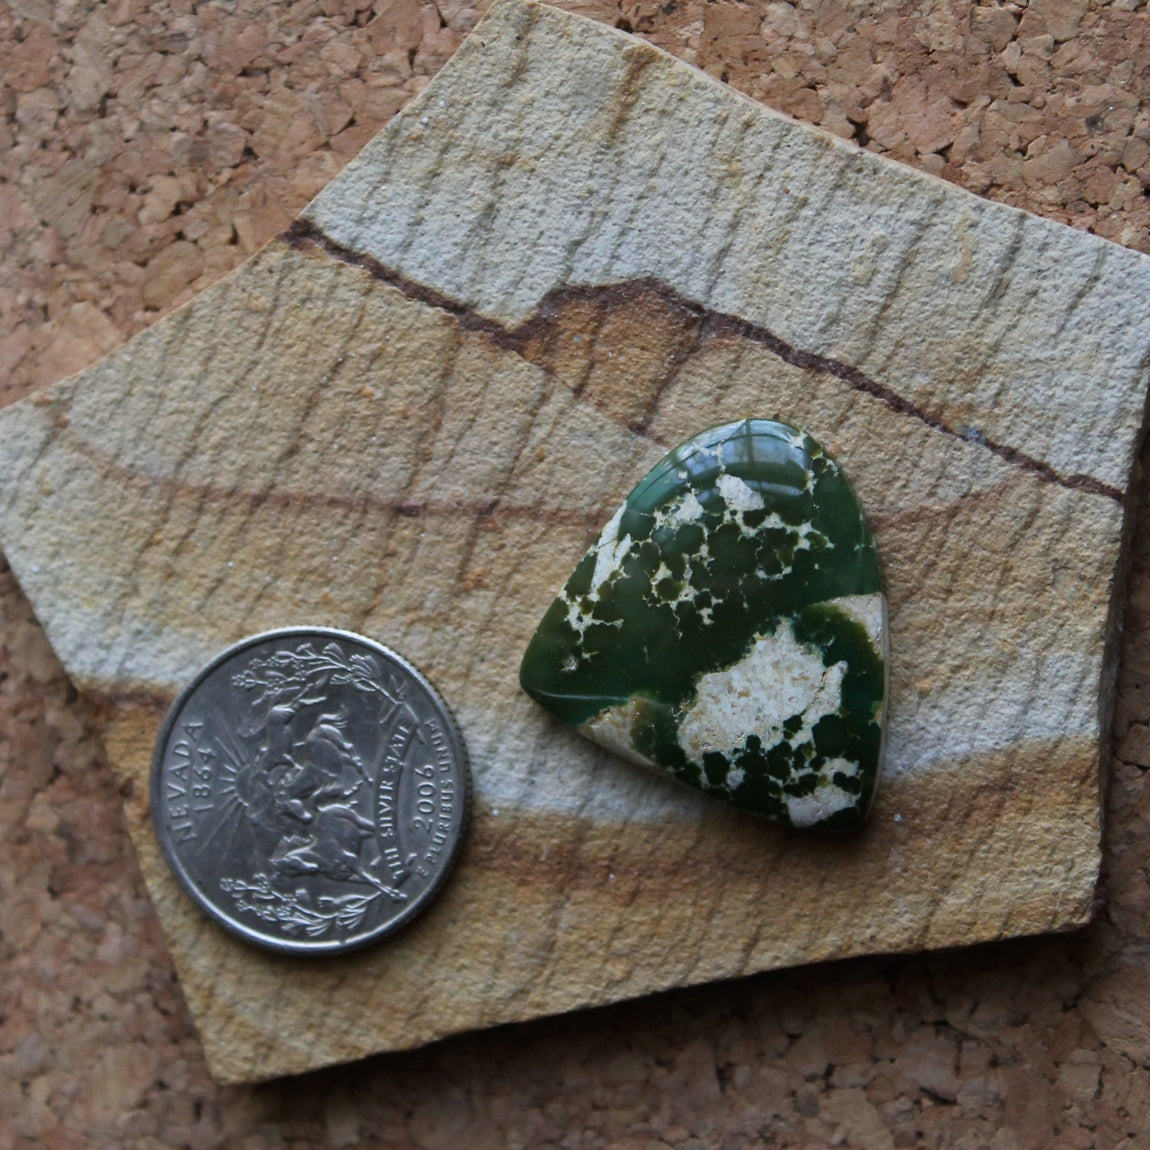 27 carat deep green Stone Mountain Turquoise cabochon